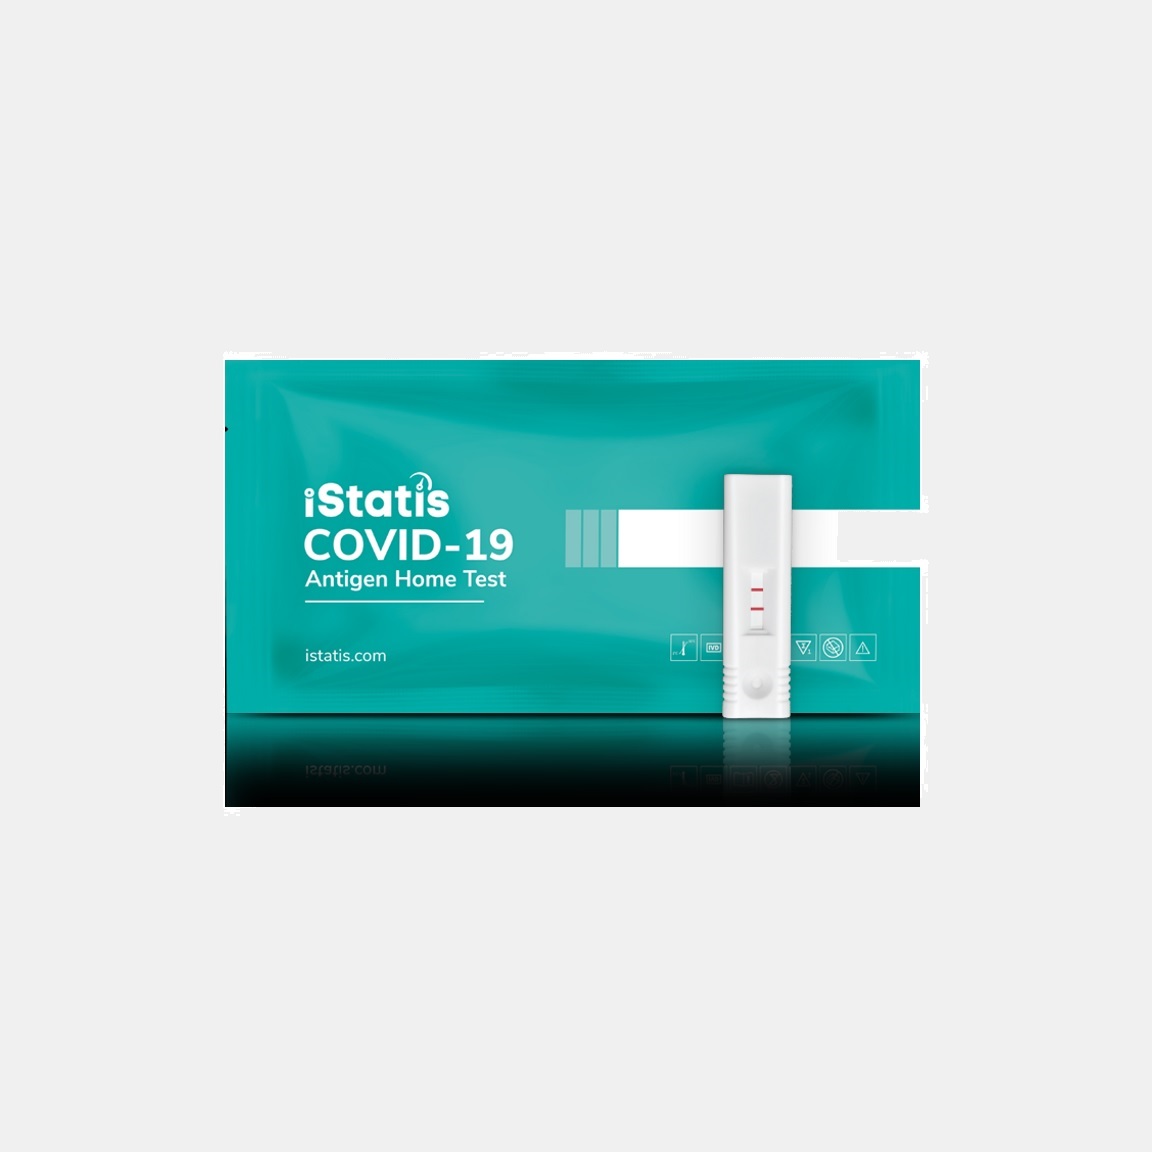 iStatis COVID-19 Antigen Home Test